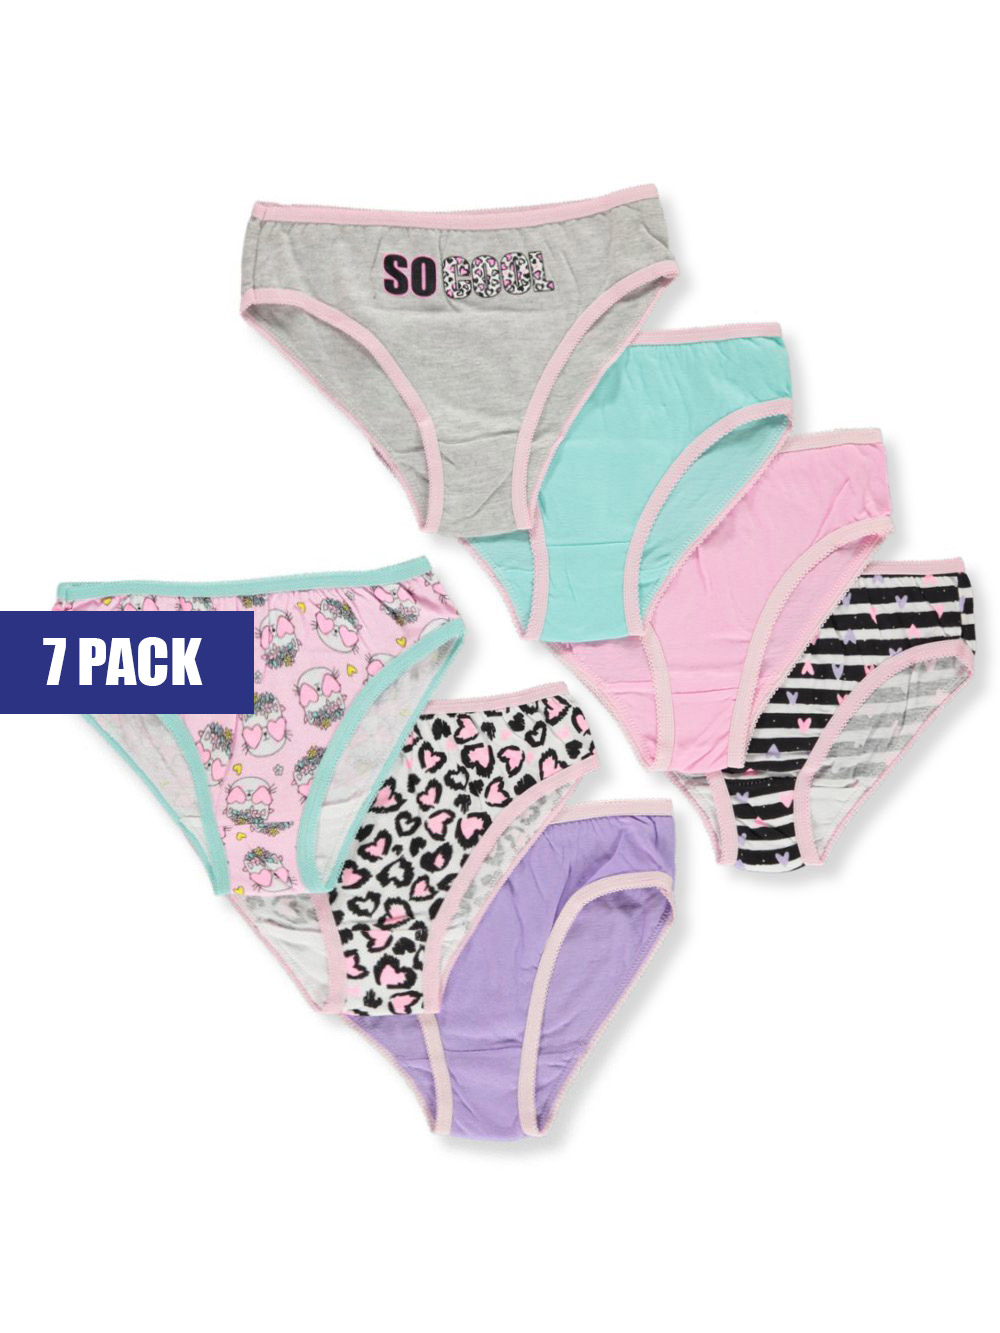 Hello Kitty Girls Underwear, 14 Pack Panties Sizes 4 - 8